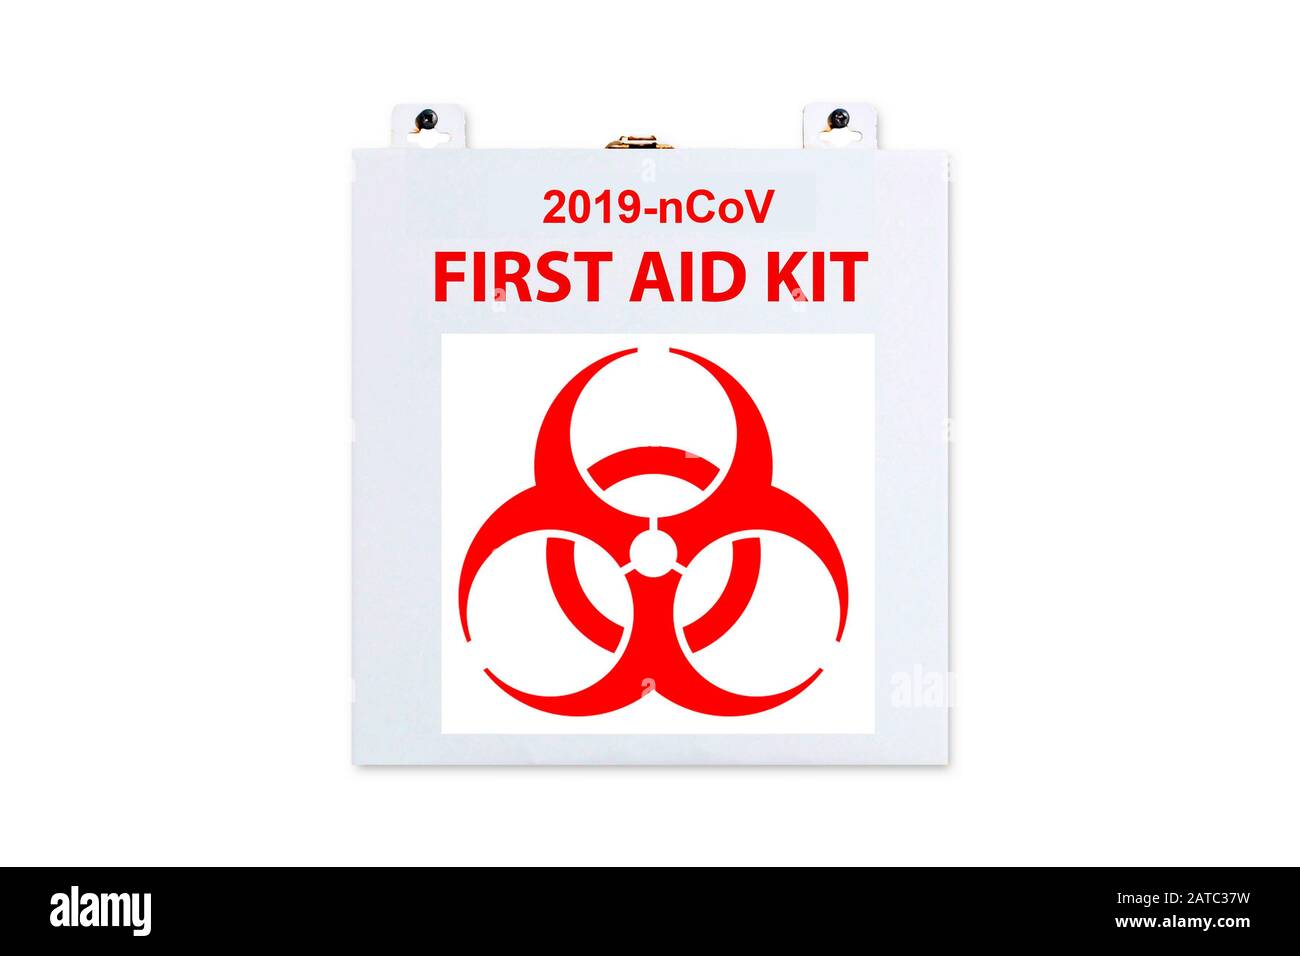 Kit De Primeros Auxilios, Erste Hilfe Kasten, Corona-Virus, 2019-Ncov, Foto de stock